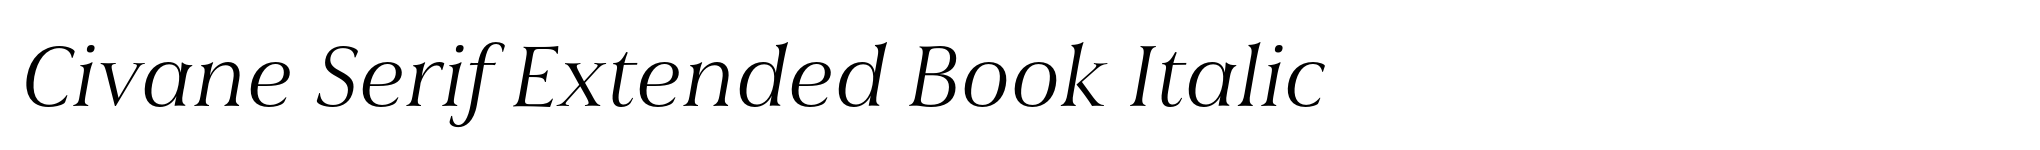 Civane Serif Extended Book Italic image